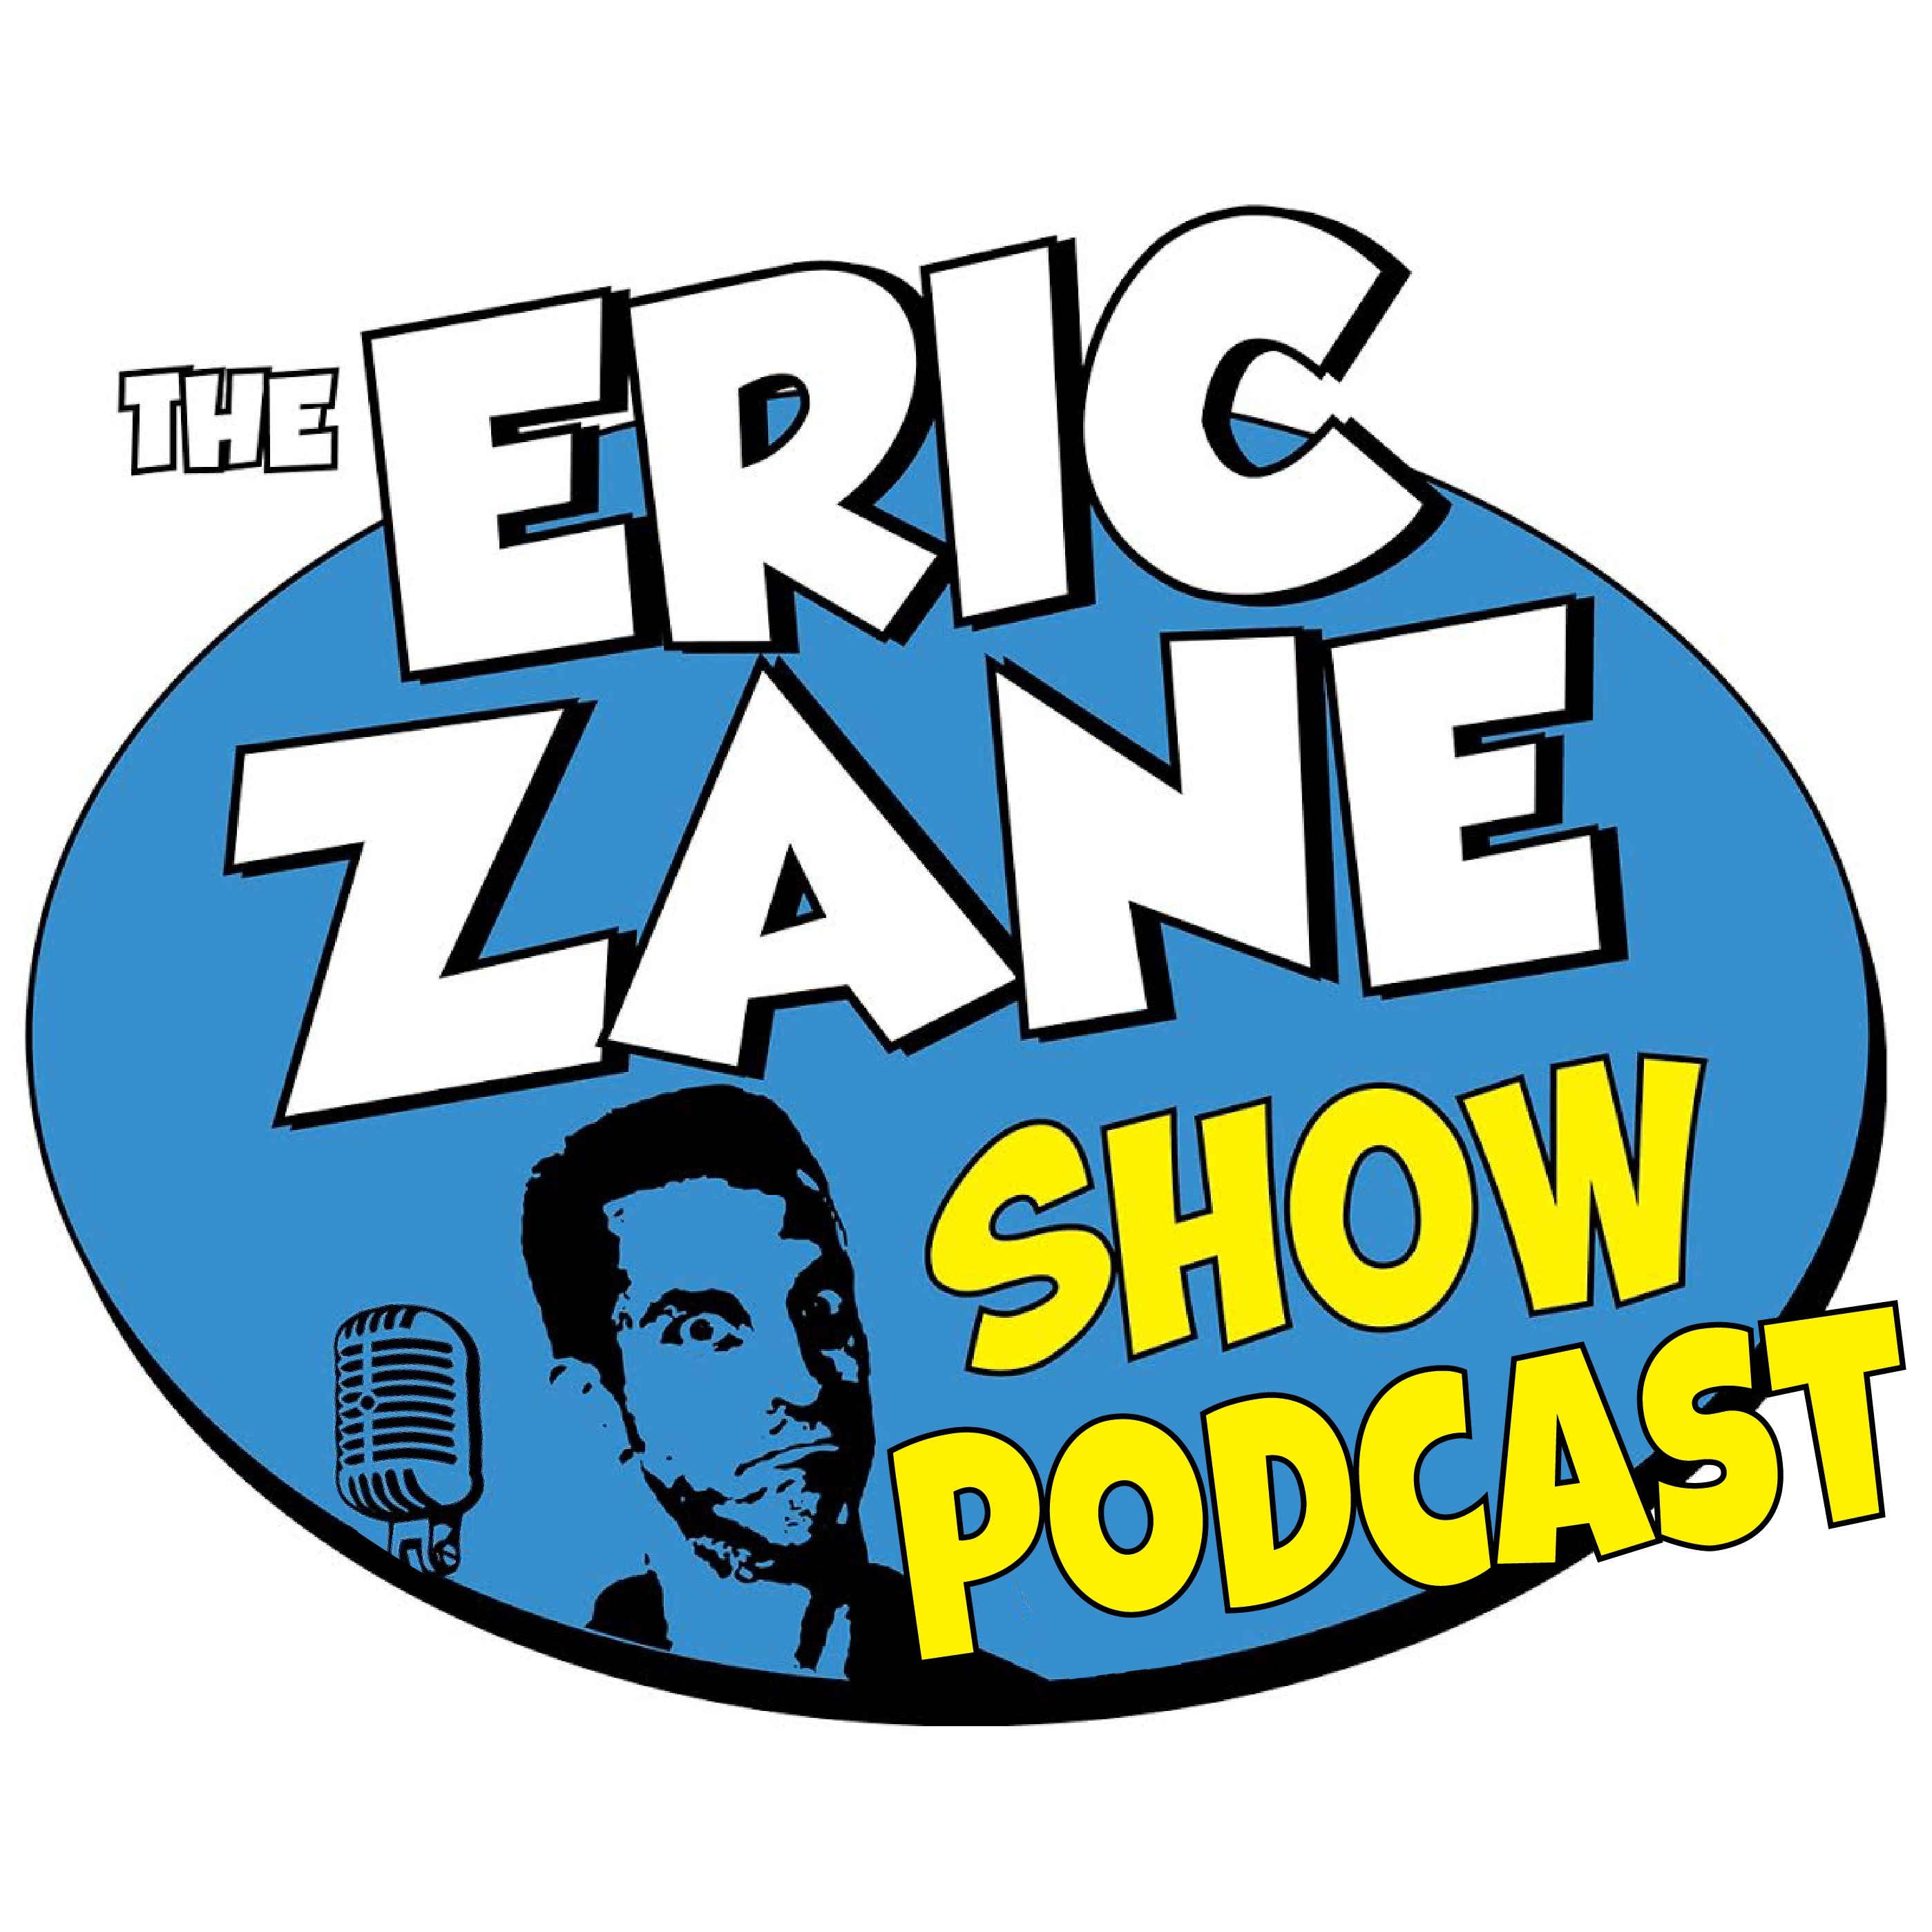 Eric Zane Show Podcast 936 - For God's sake, take the annuity